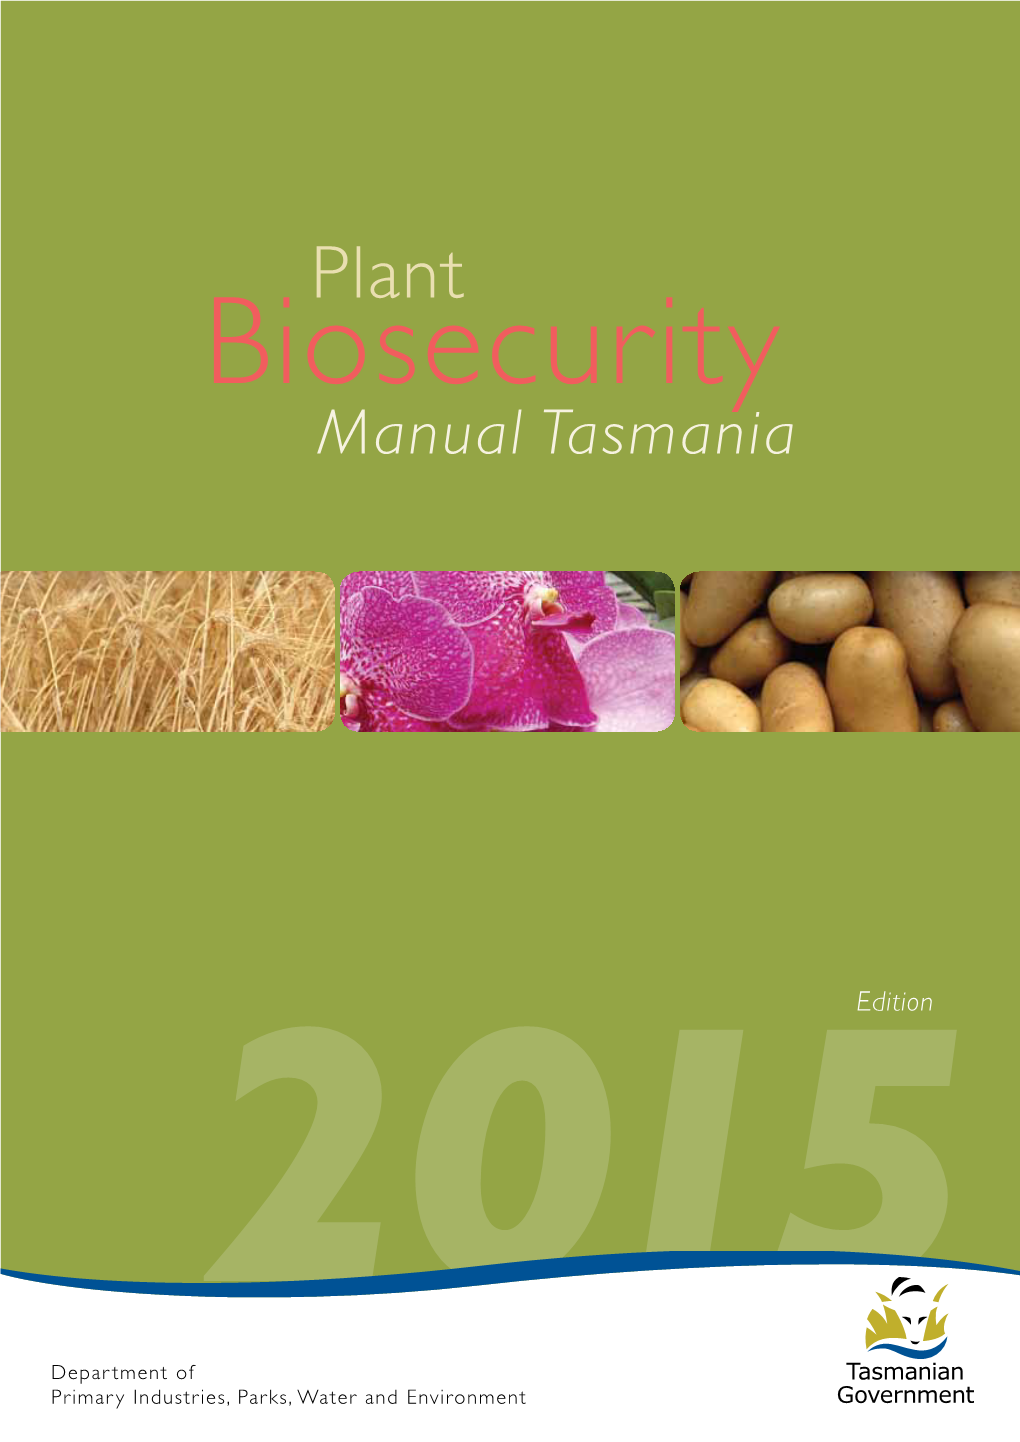 Manual Tasmania